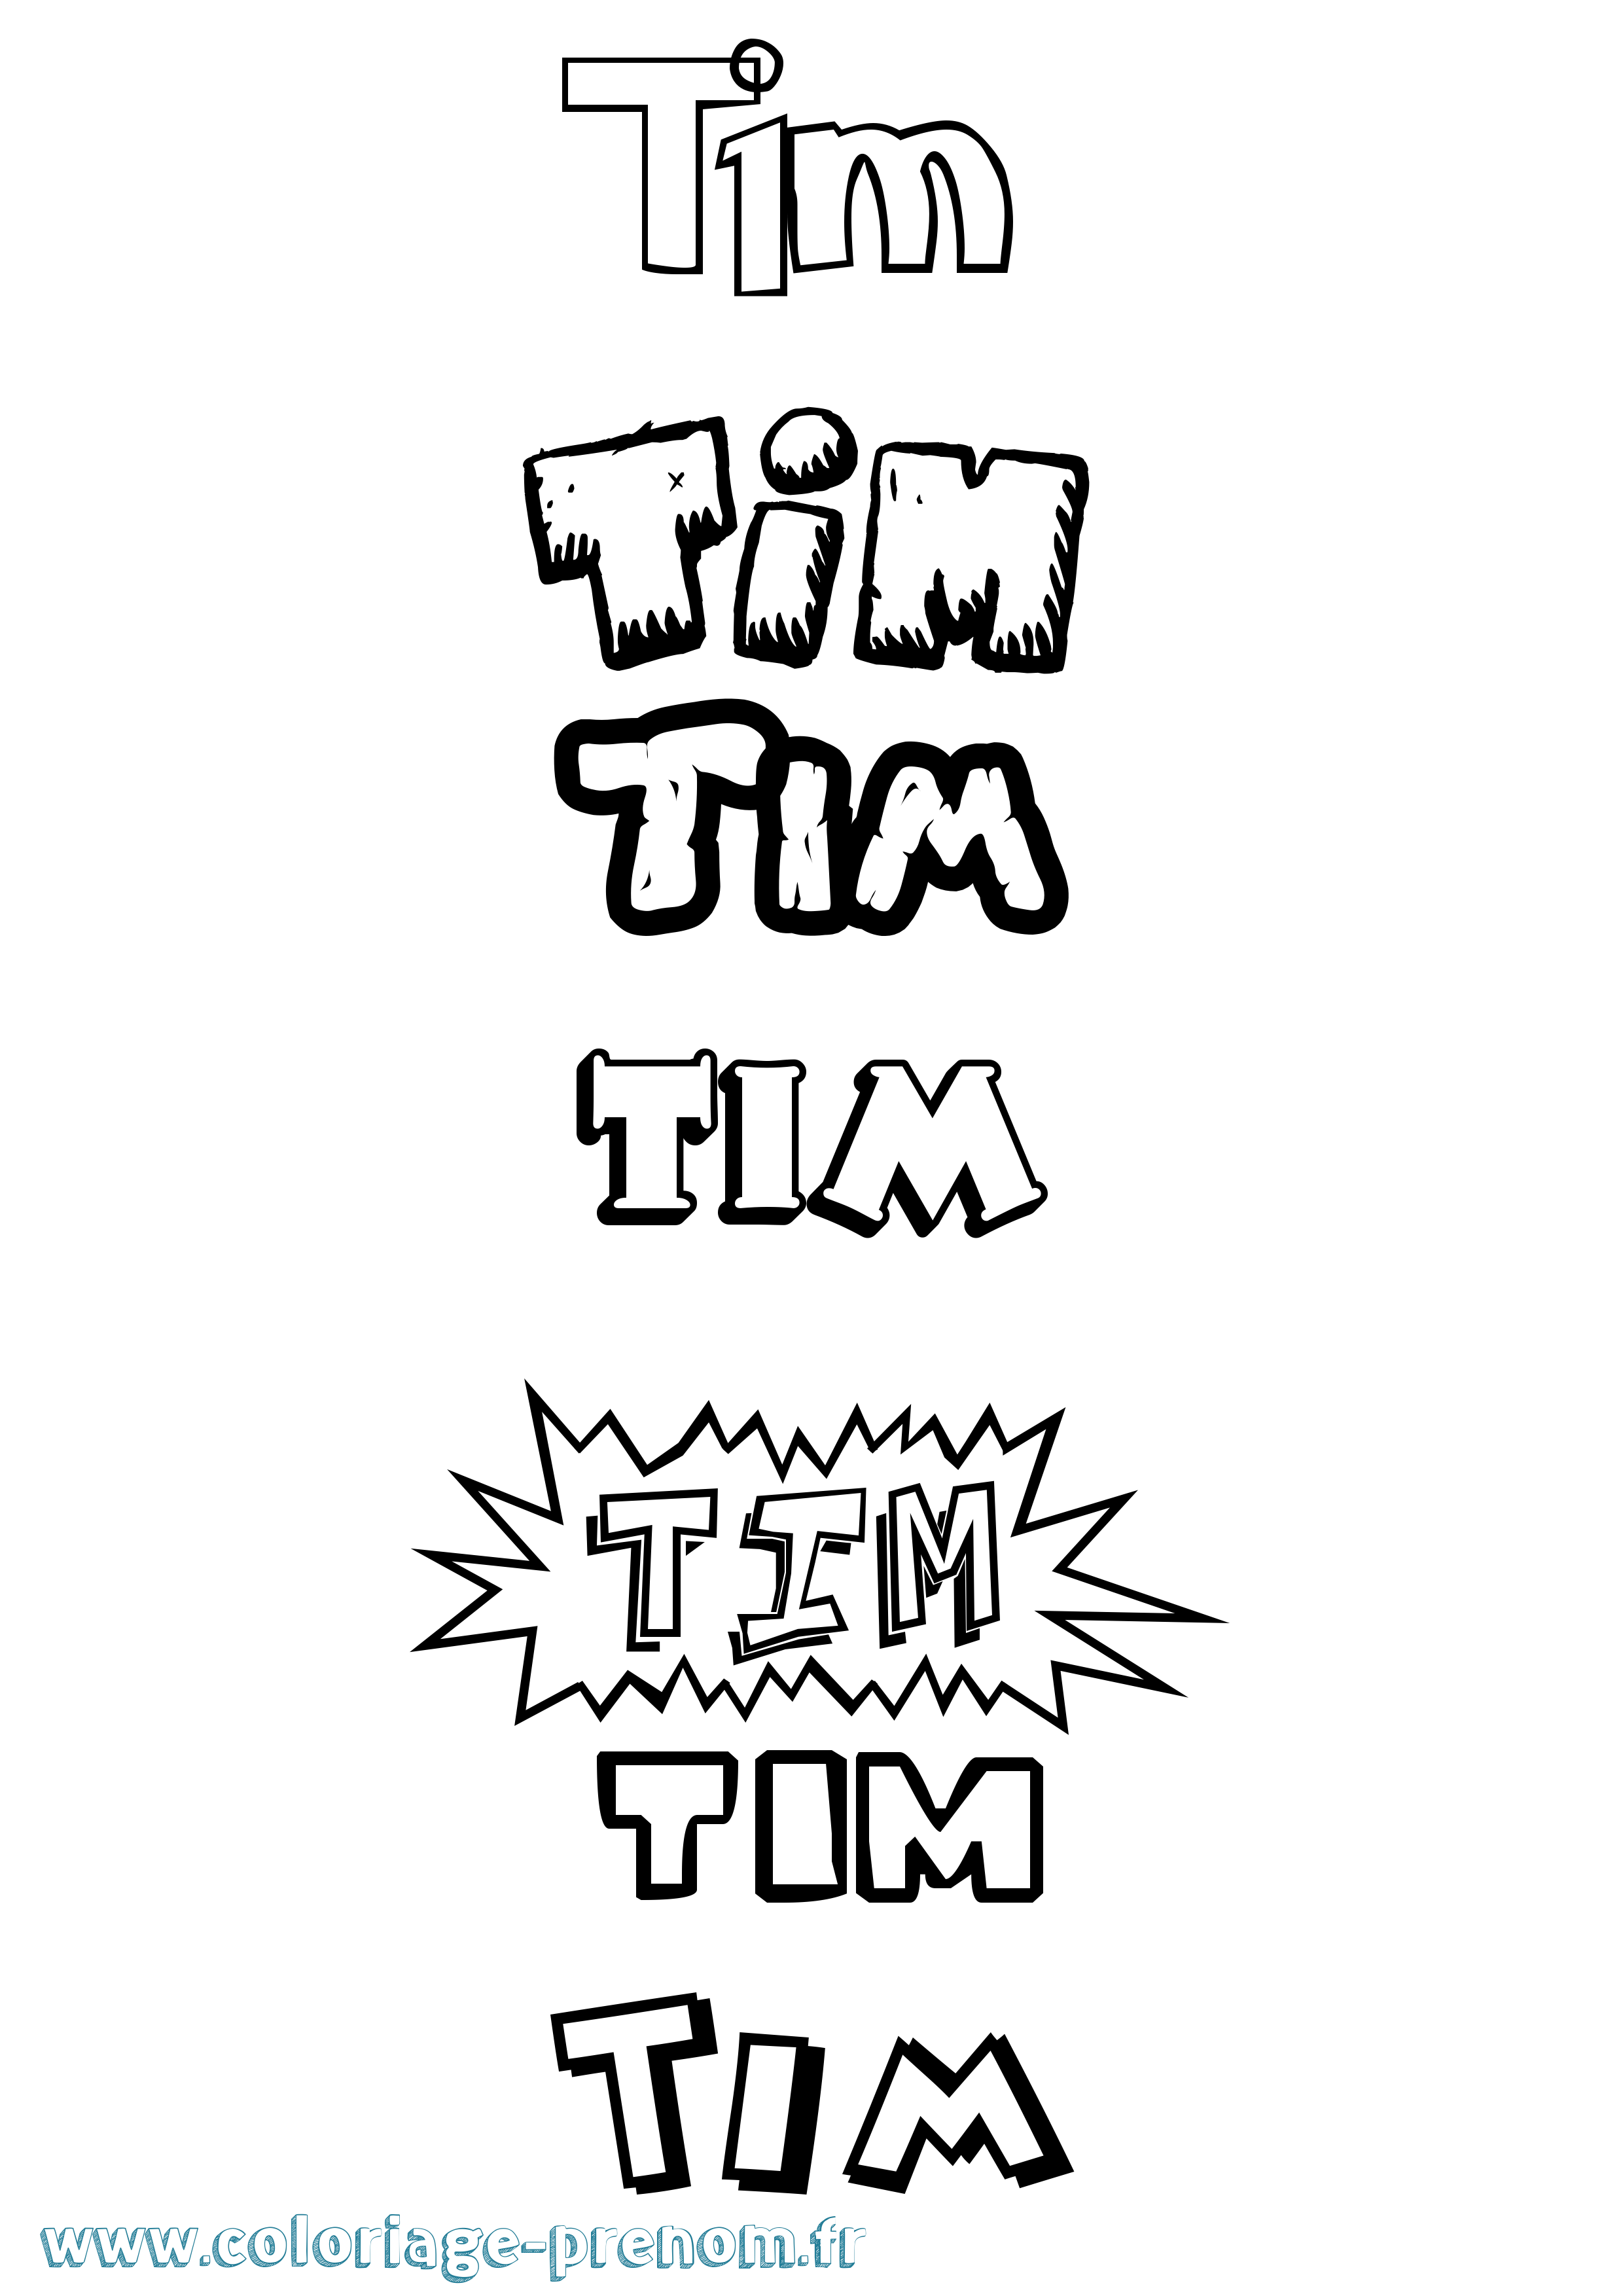 Coloriage prénom Tim